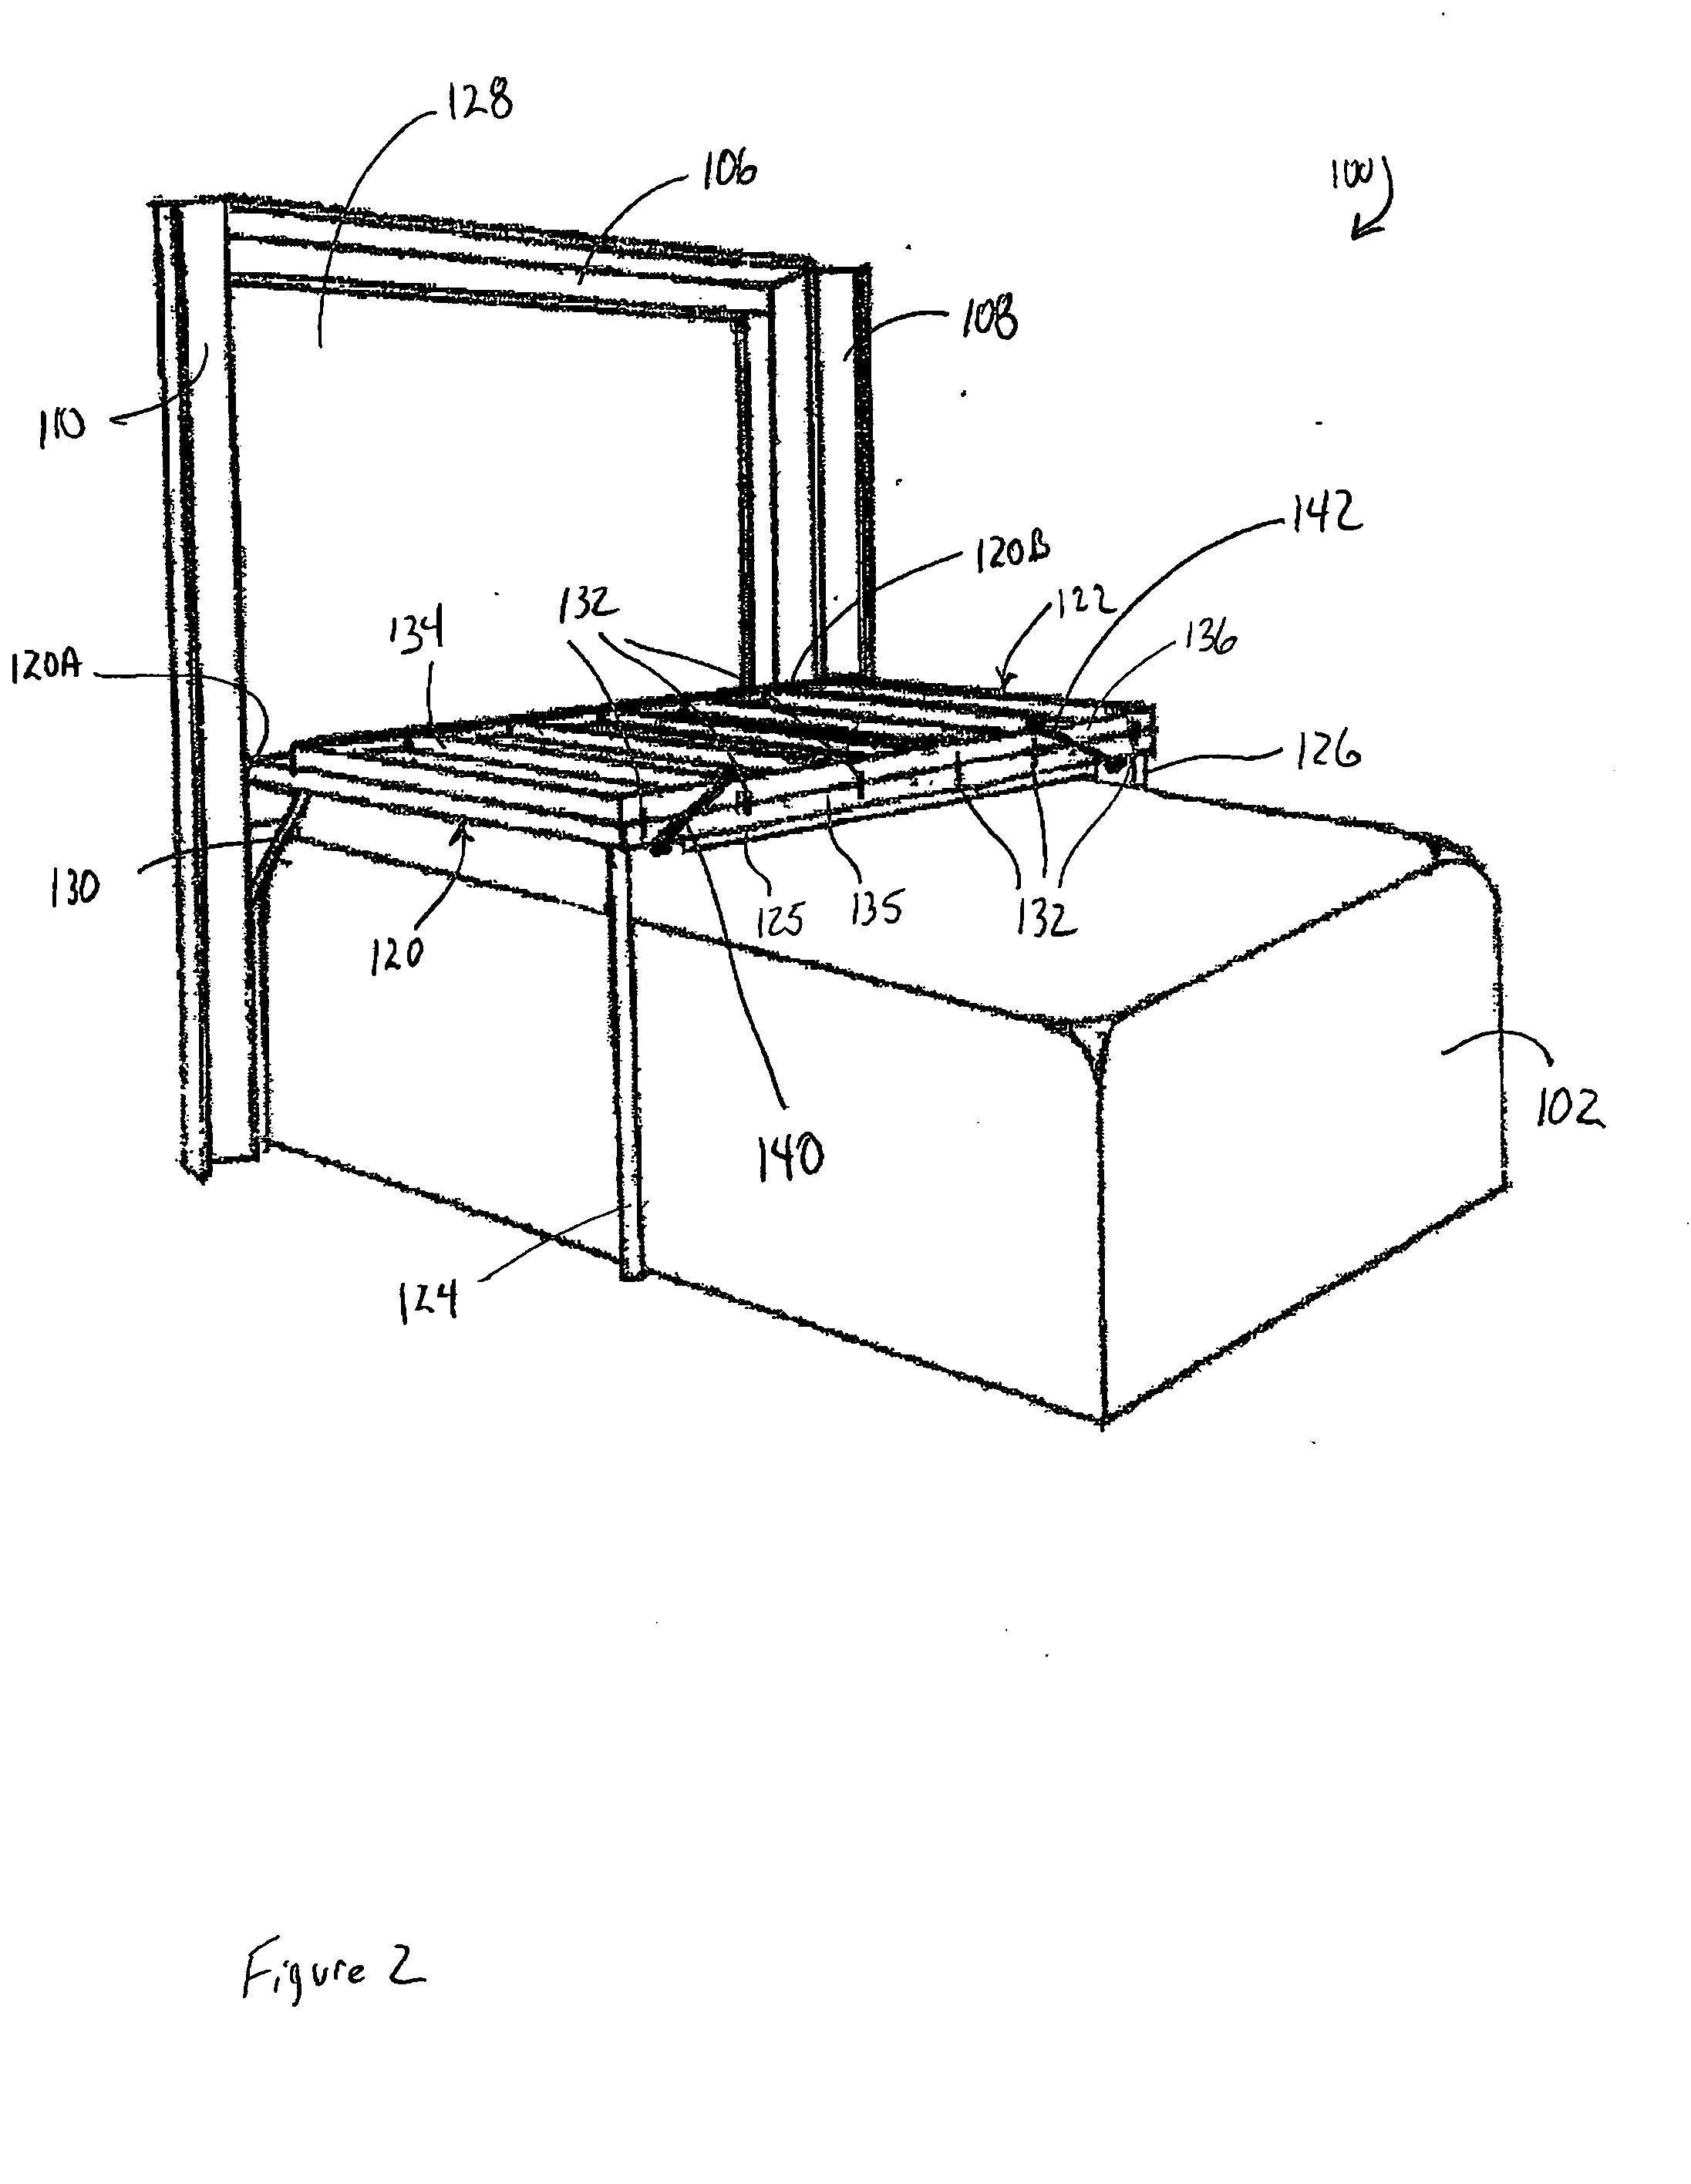 Convertible headboard table apparatus